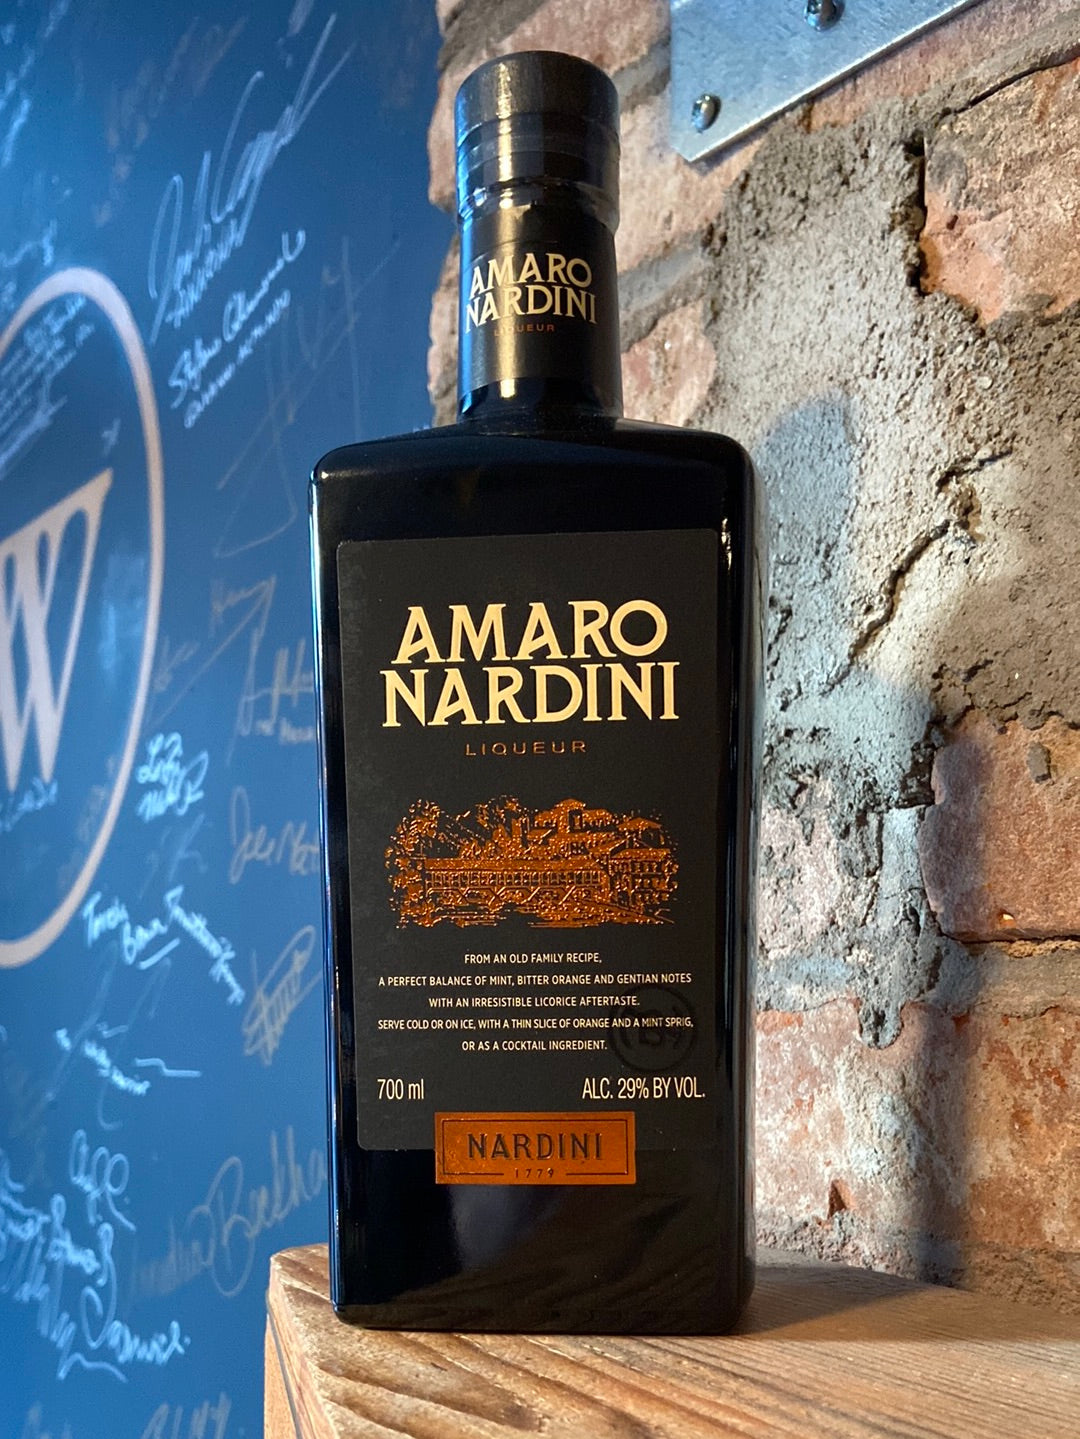 Nardini Amaro 700ml